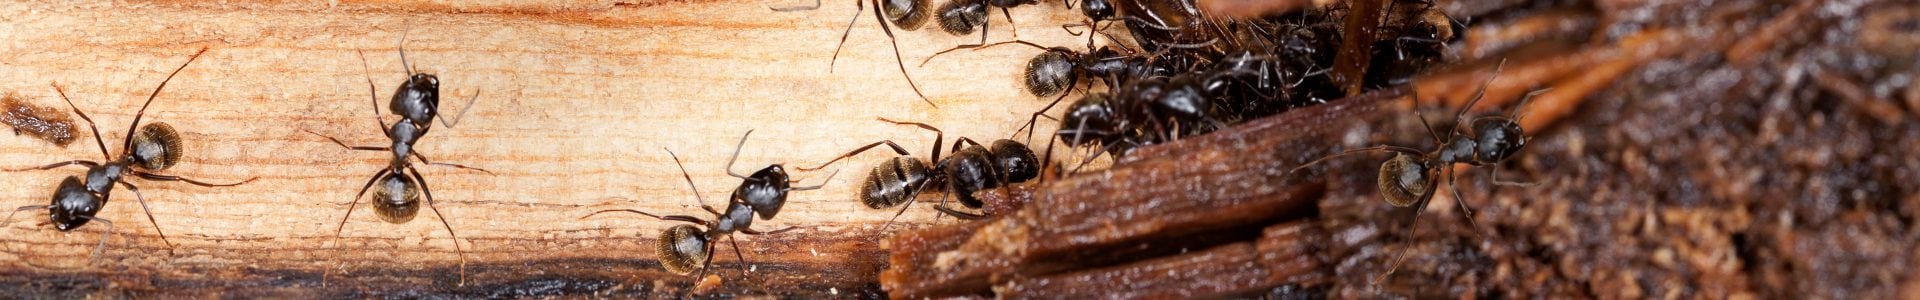 Ladybug Imposters: Asian Lady Beetles